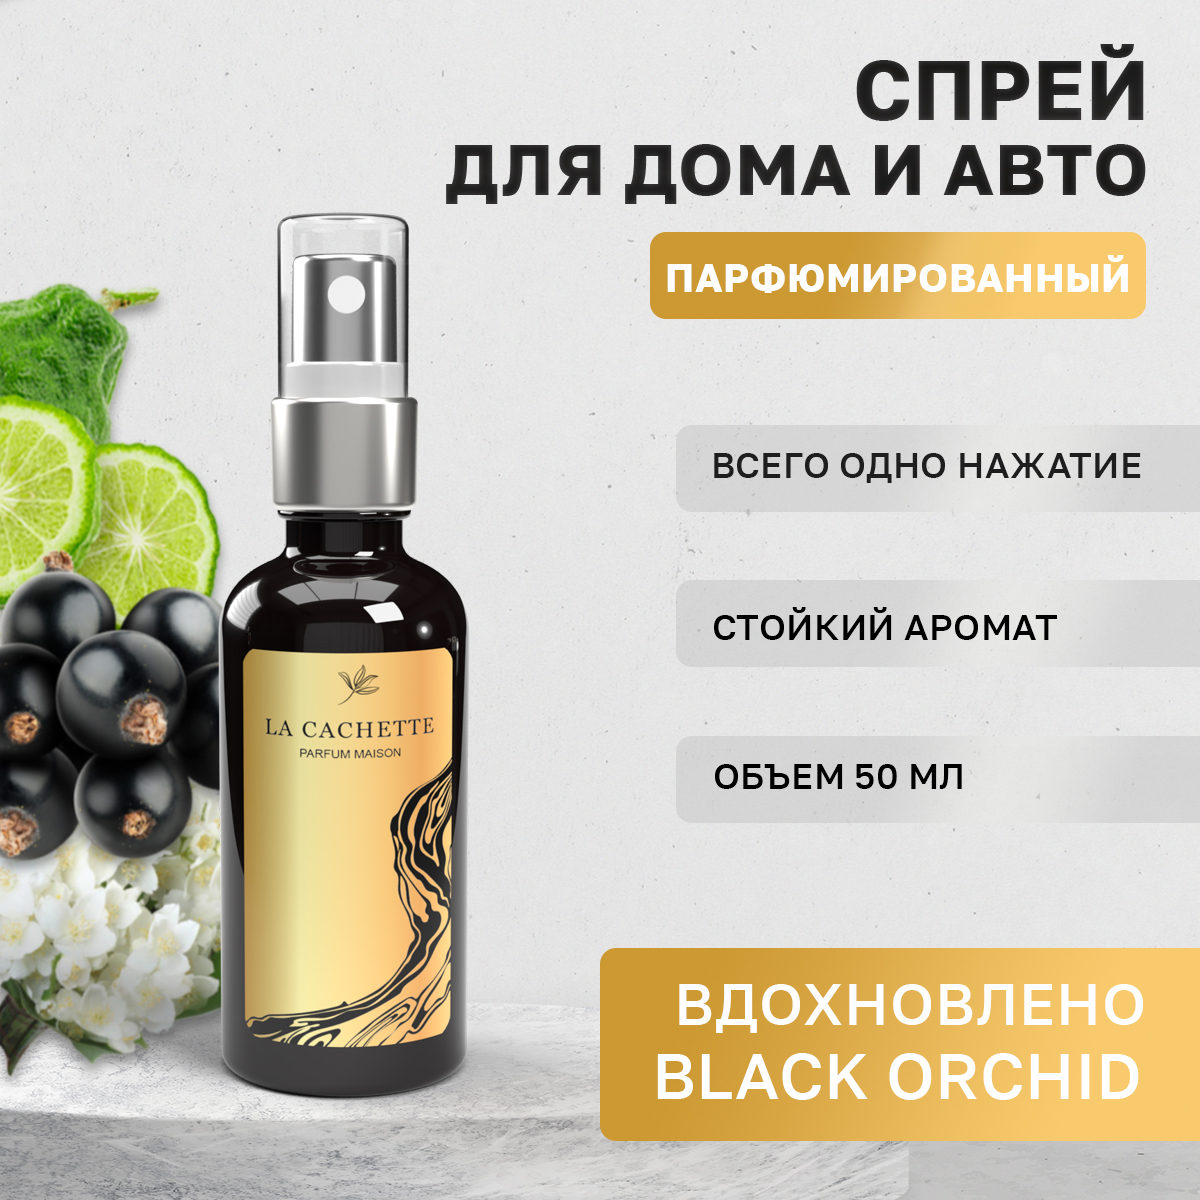 Автомобильный ароматизатор La Cachette W020 Black Orchid спрей, 50мл